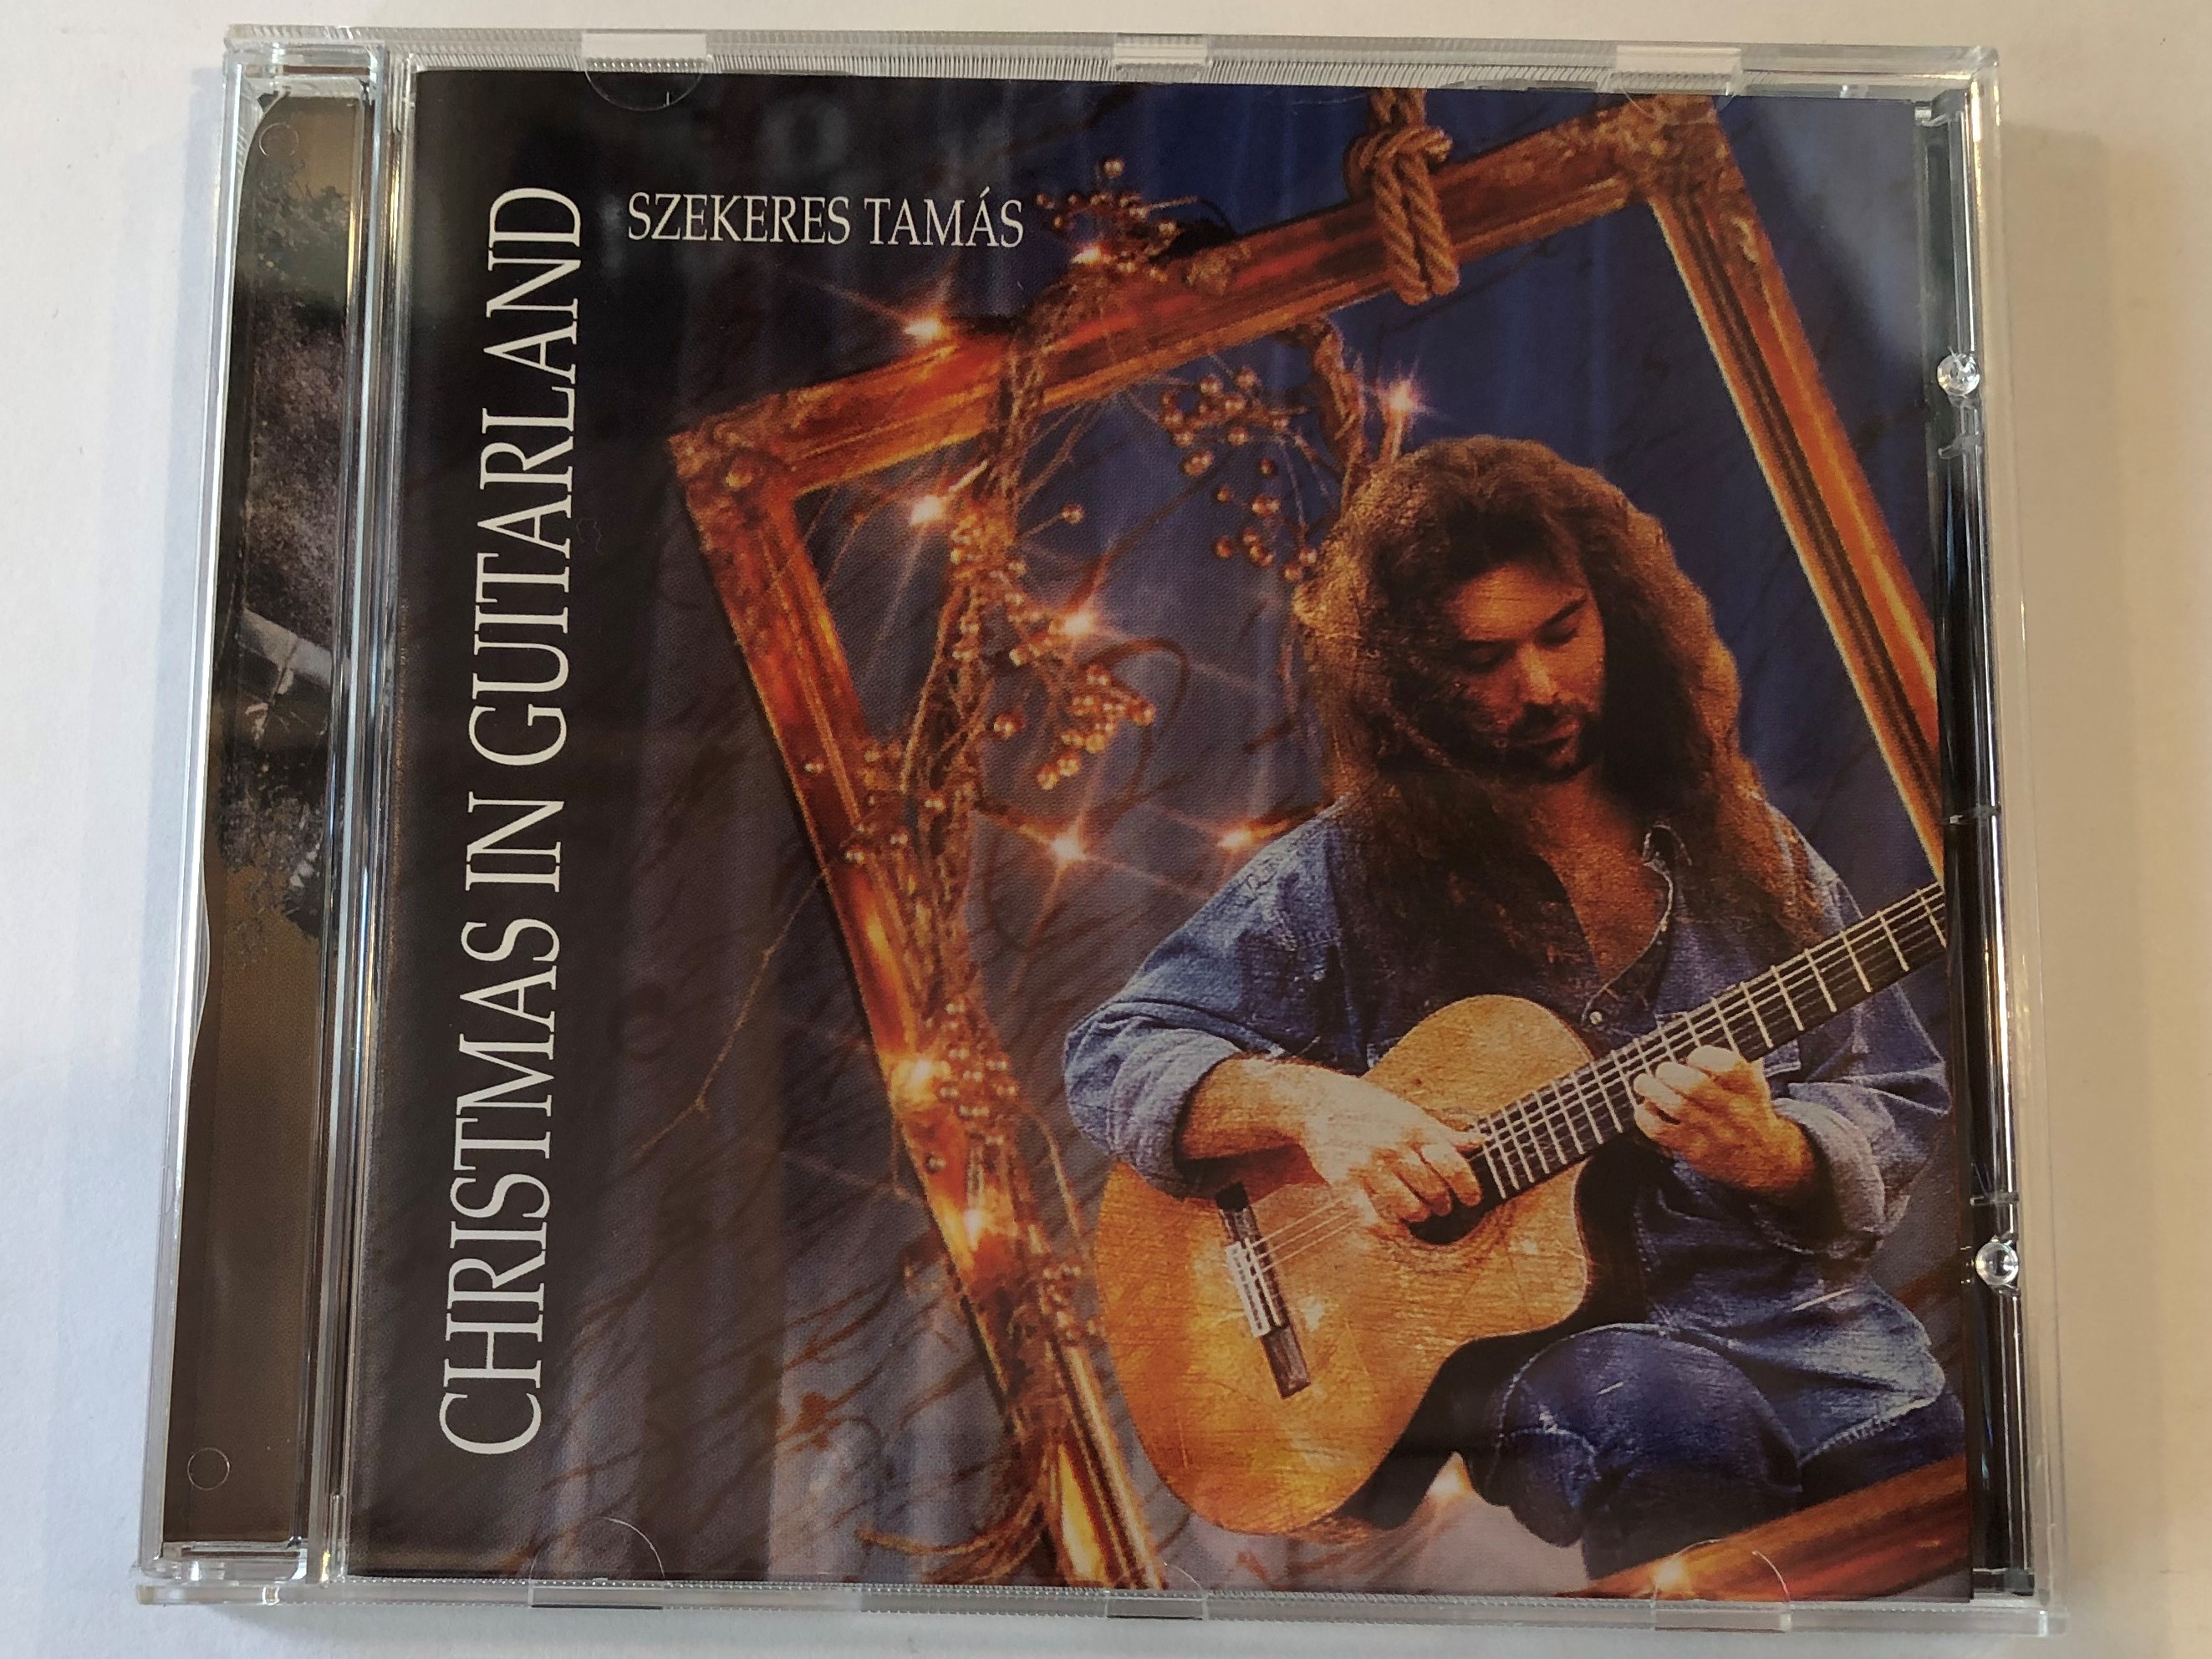 szekeres-tam-s-christmas-in-guitarland-mega-audio-cd-2001-mcda-87653-1-.jpg